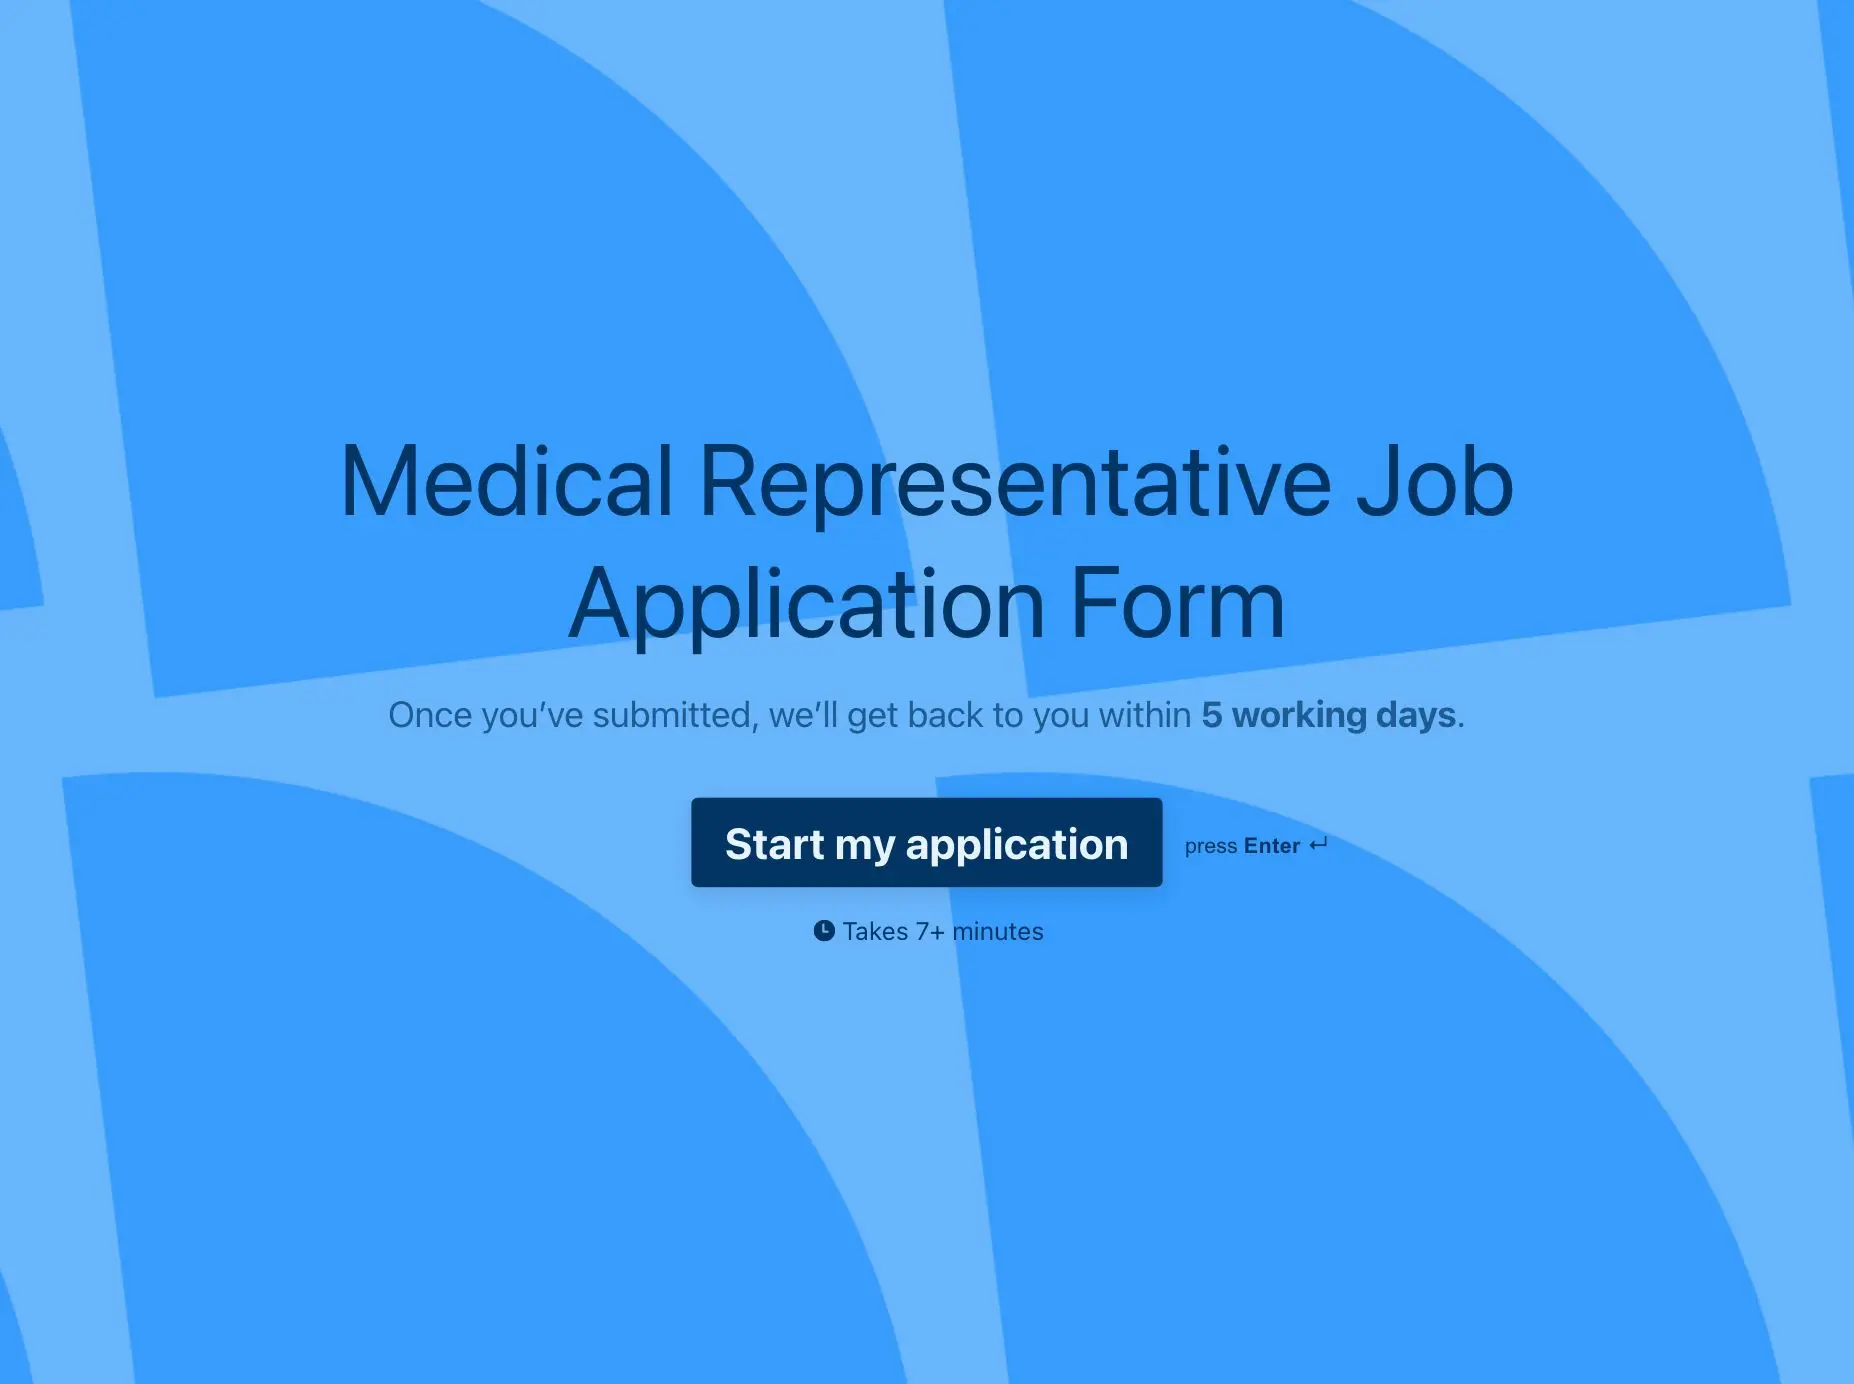 Medical Representative Job Application Form Template Hero